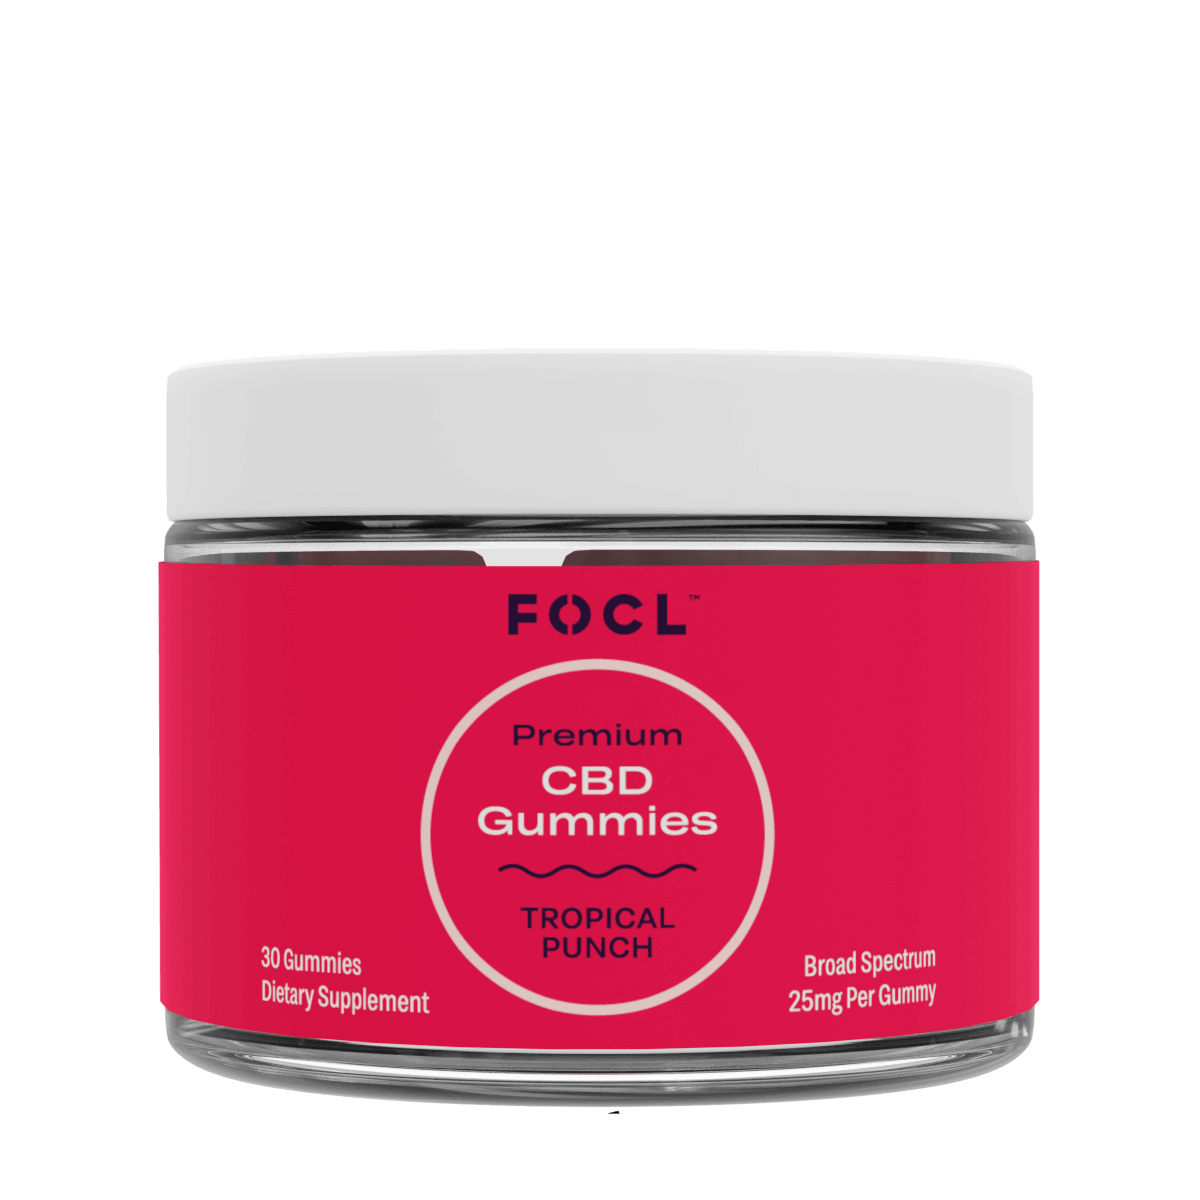 FOCL Premium CBD Gummies Tropical Punch